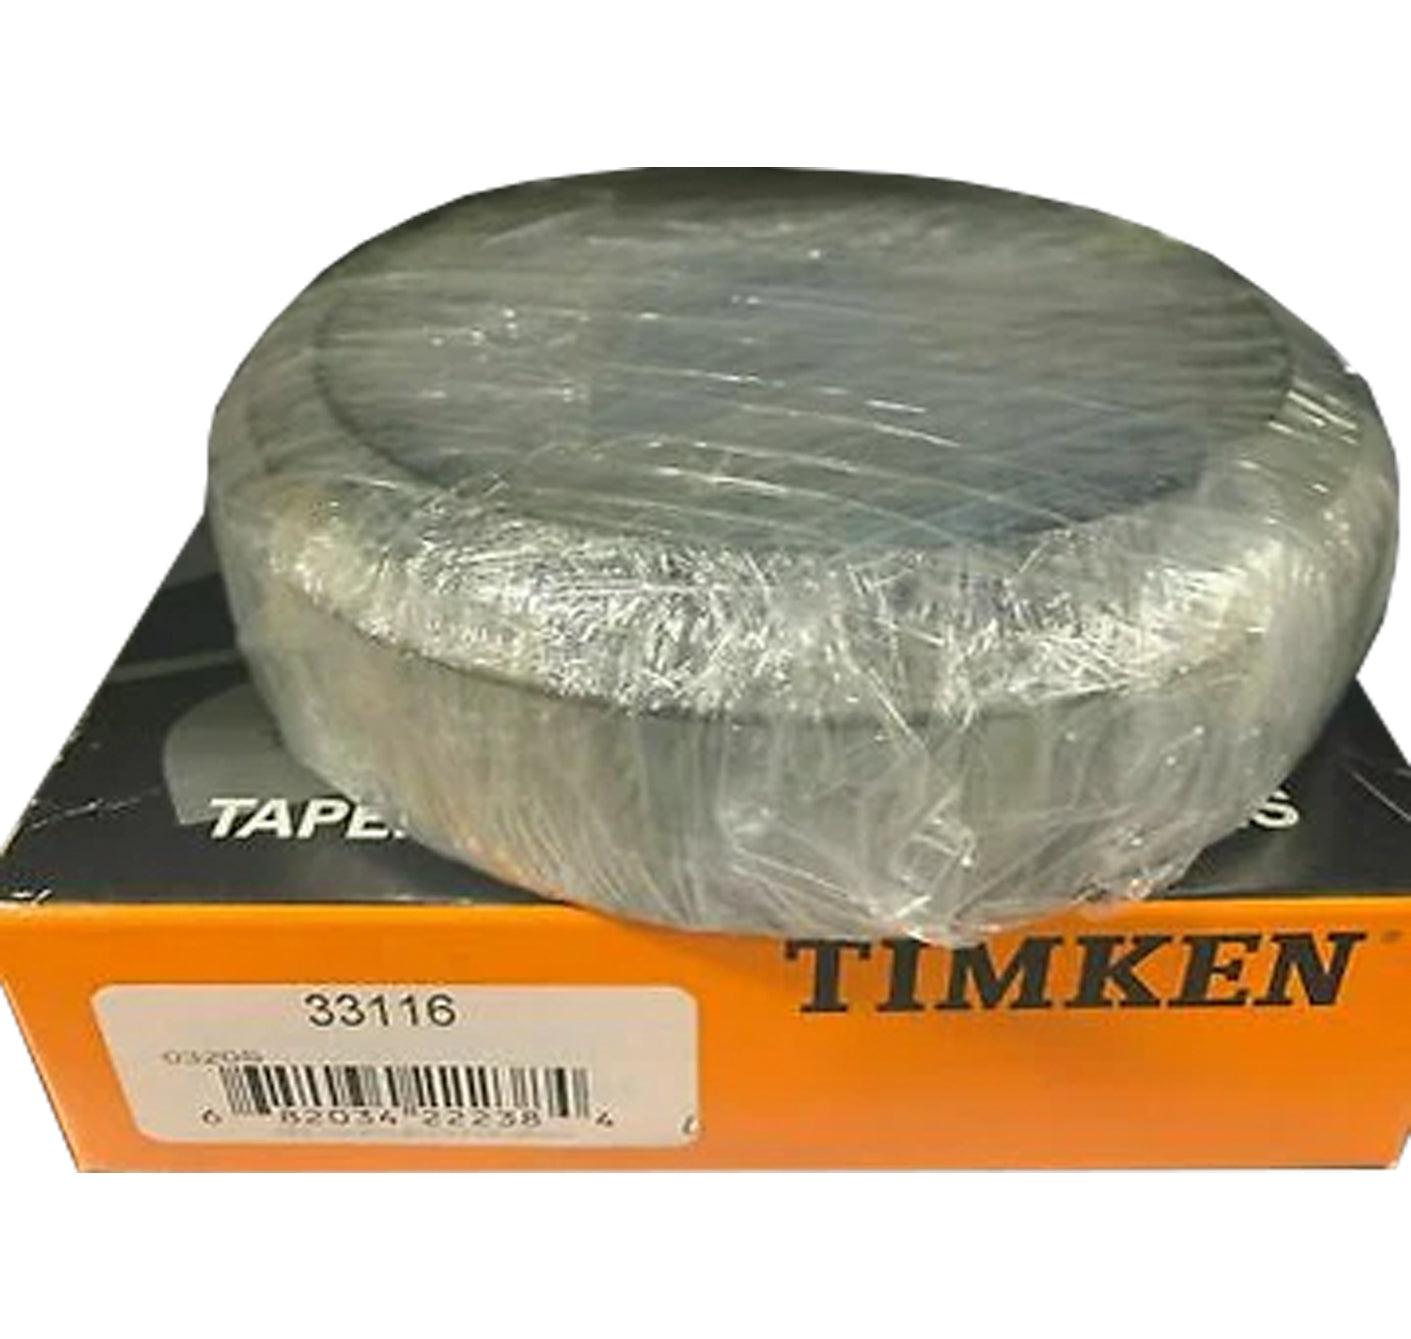 33116 Timken Metric Tapered Taper Roller Bearing Set Kit - ADVANCED TRUCK PARTS